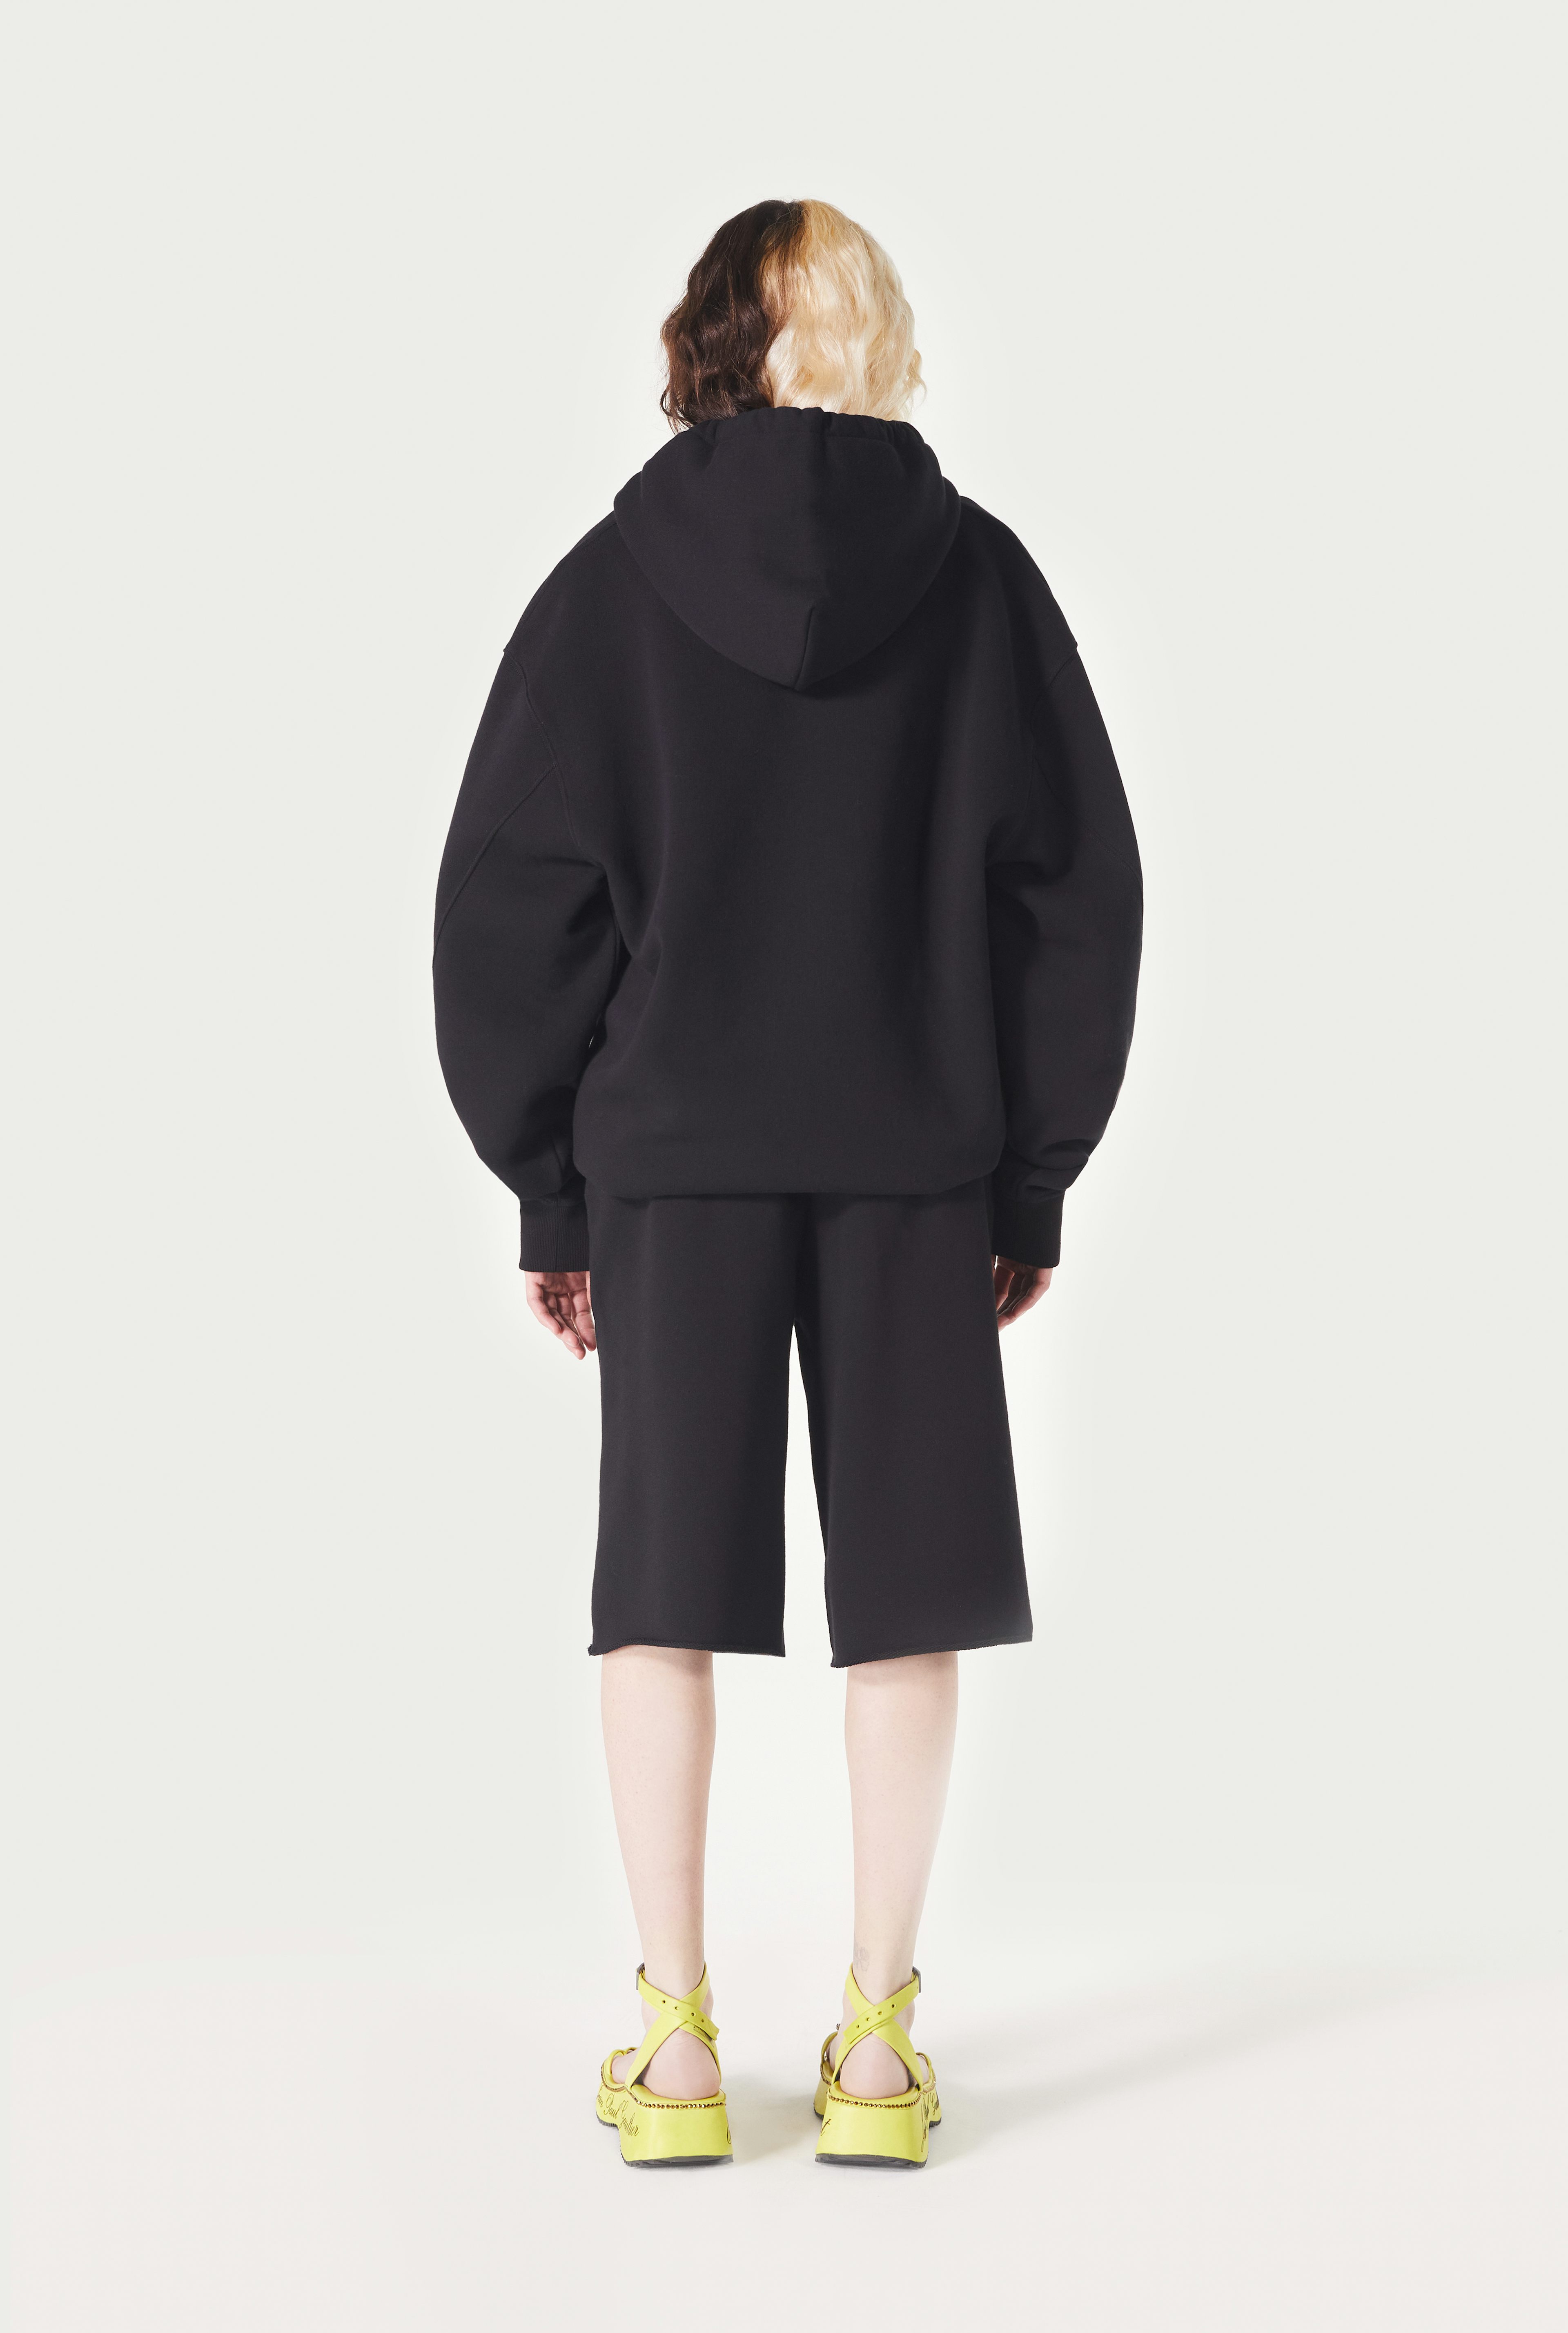 The Black Hooded Évidemment Sweatshirt Jean Paul Gaultier